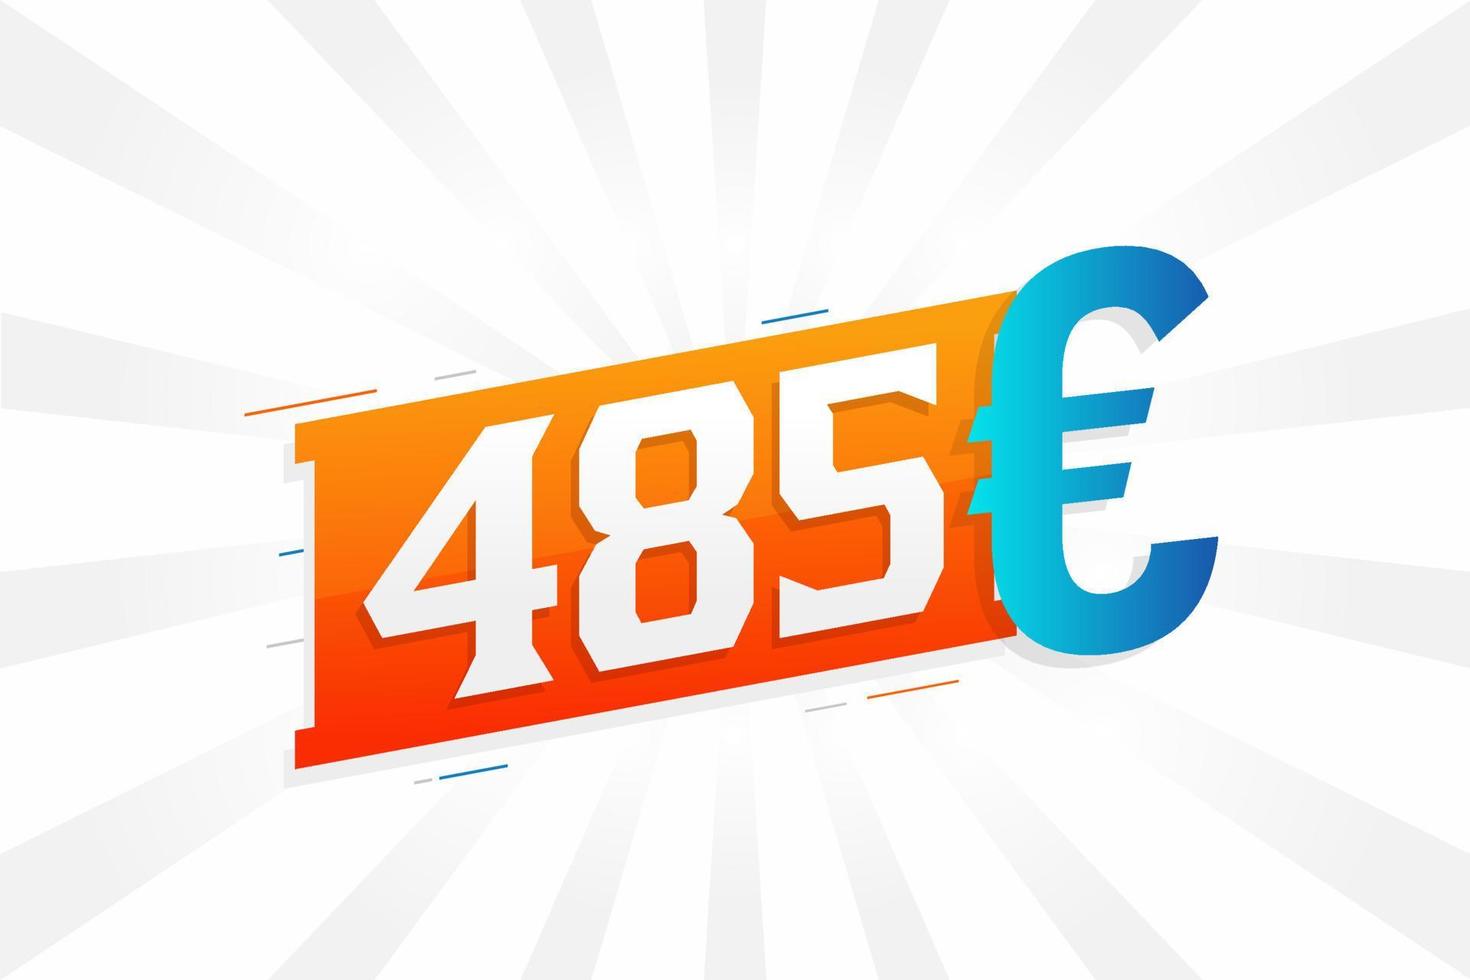 485 euro valuta vektor text symbol. 485 euro europeisk union pengar stock vektor